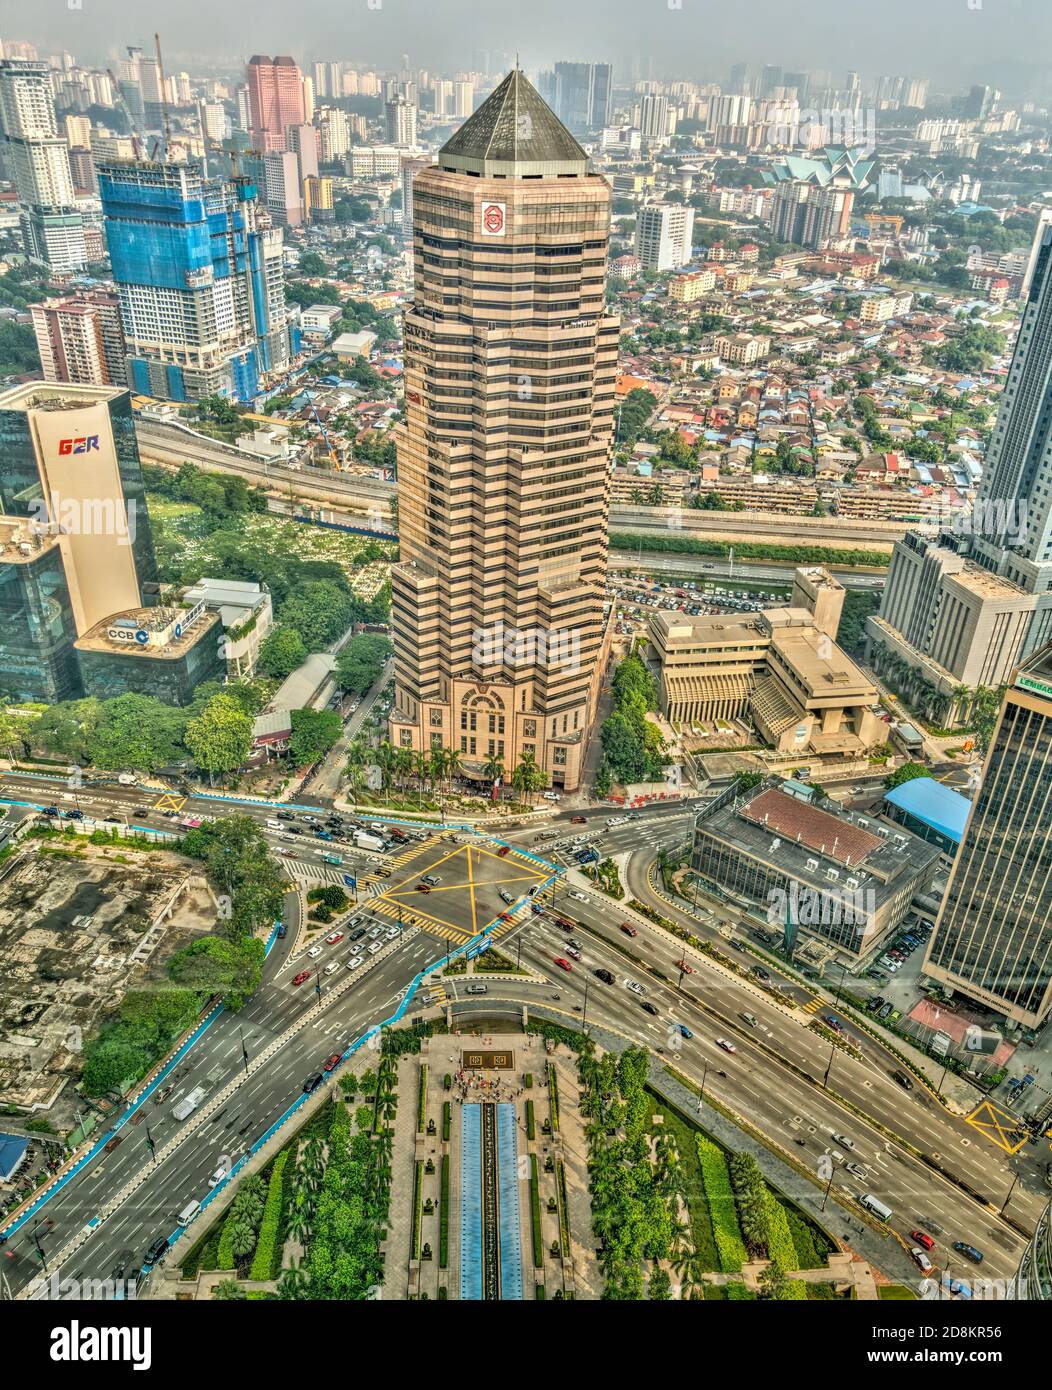 KLCC District, Kuala Lumpur, HDR image Banque D'Images